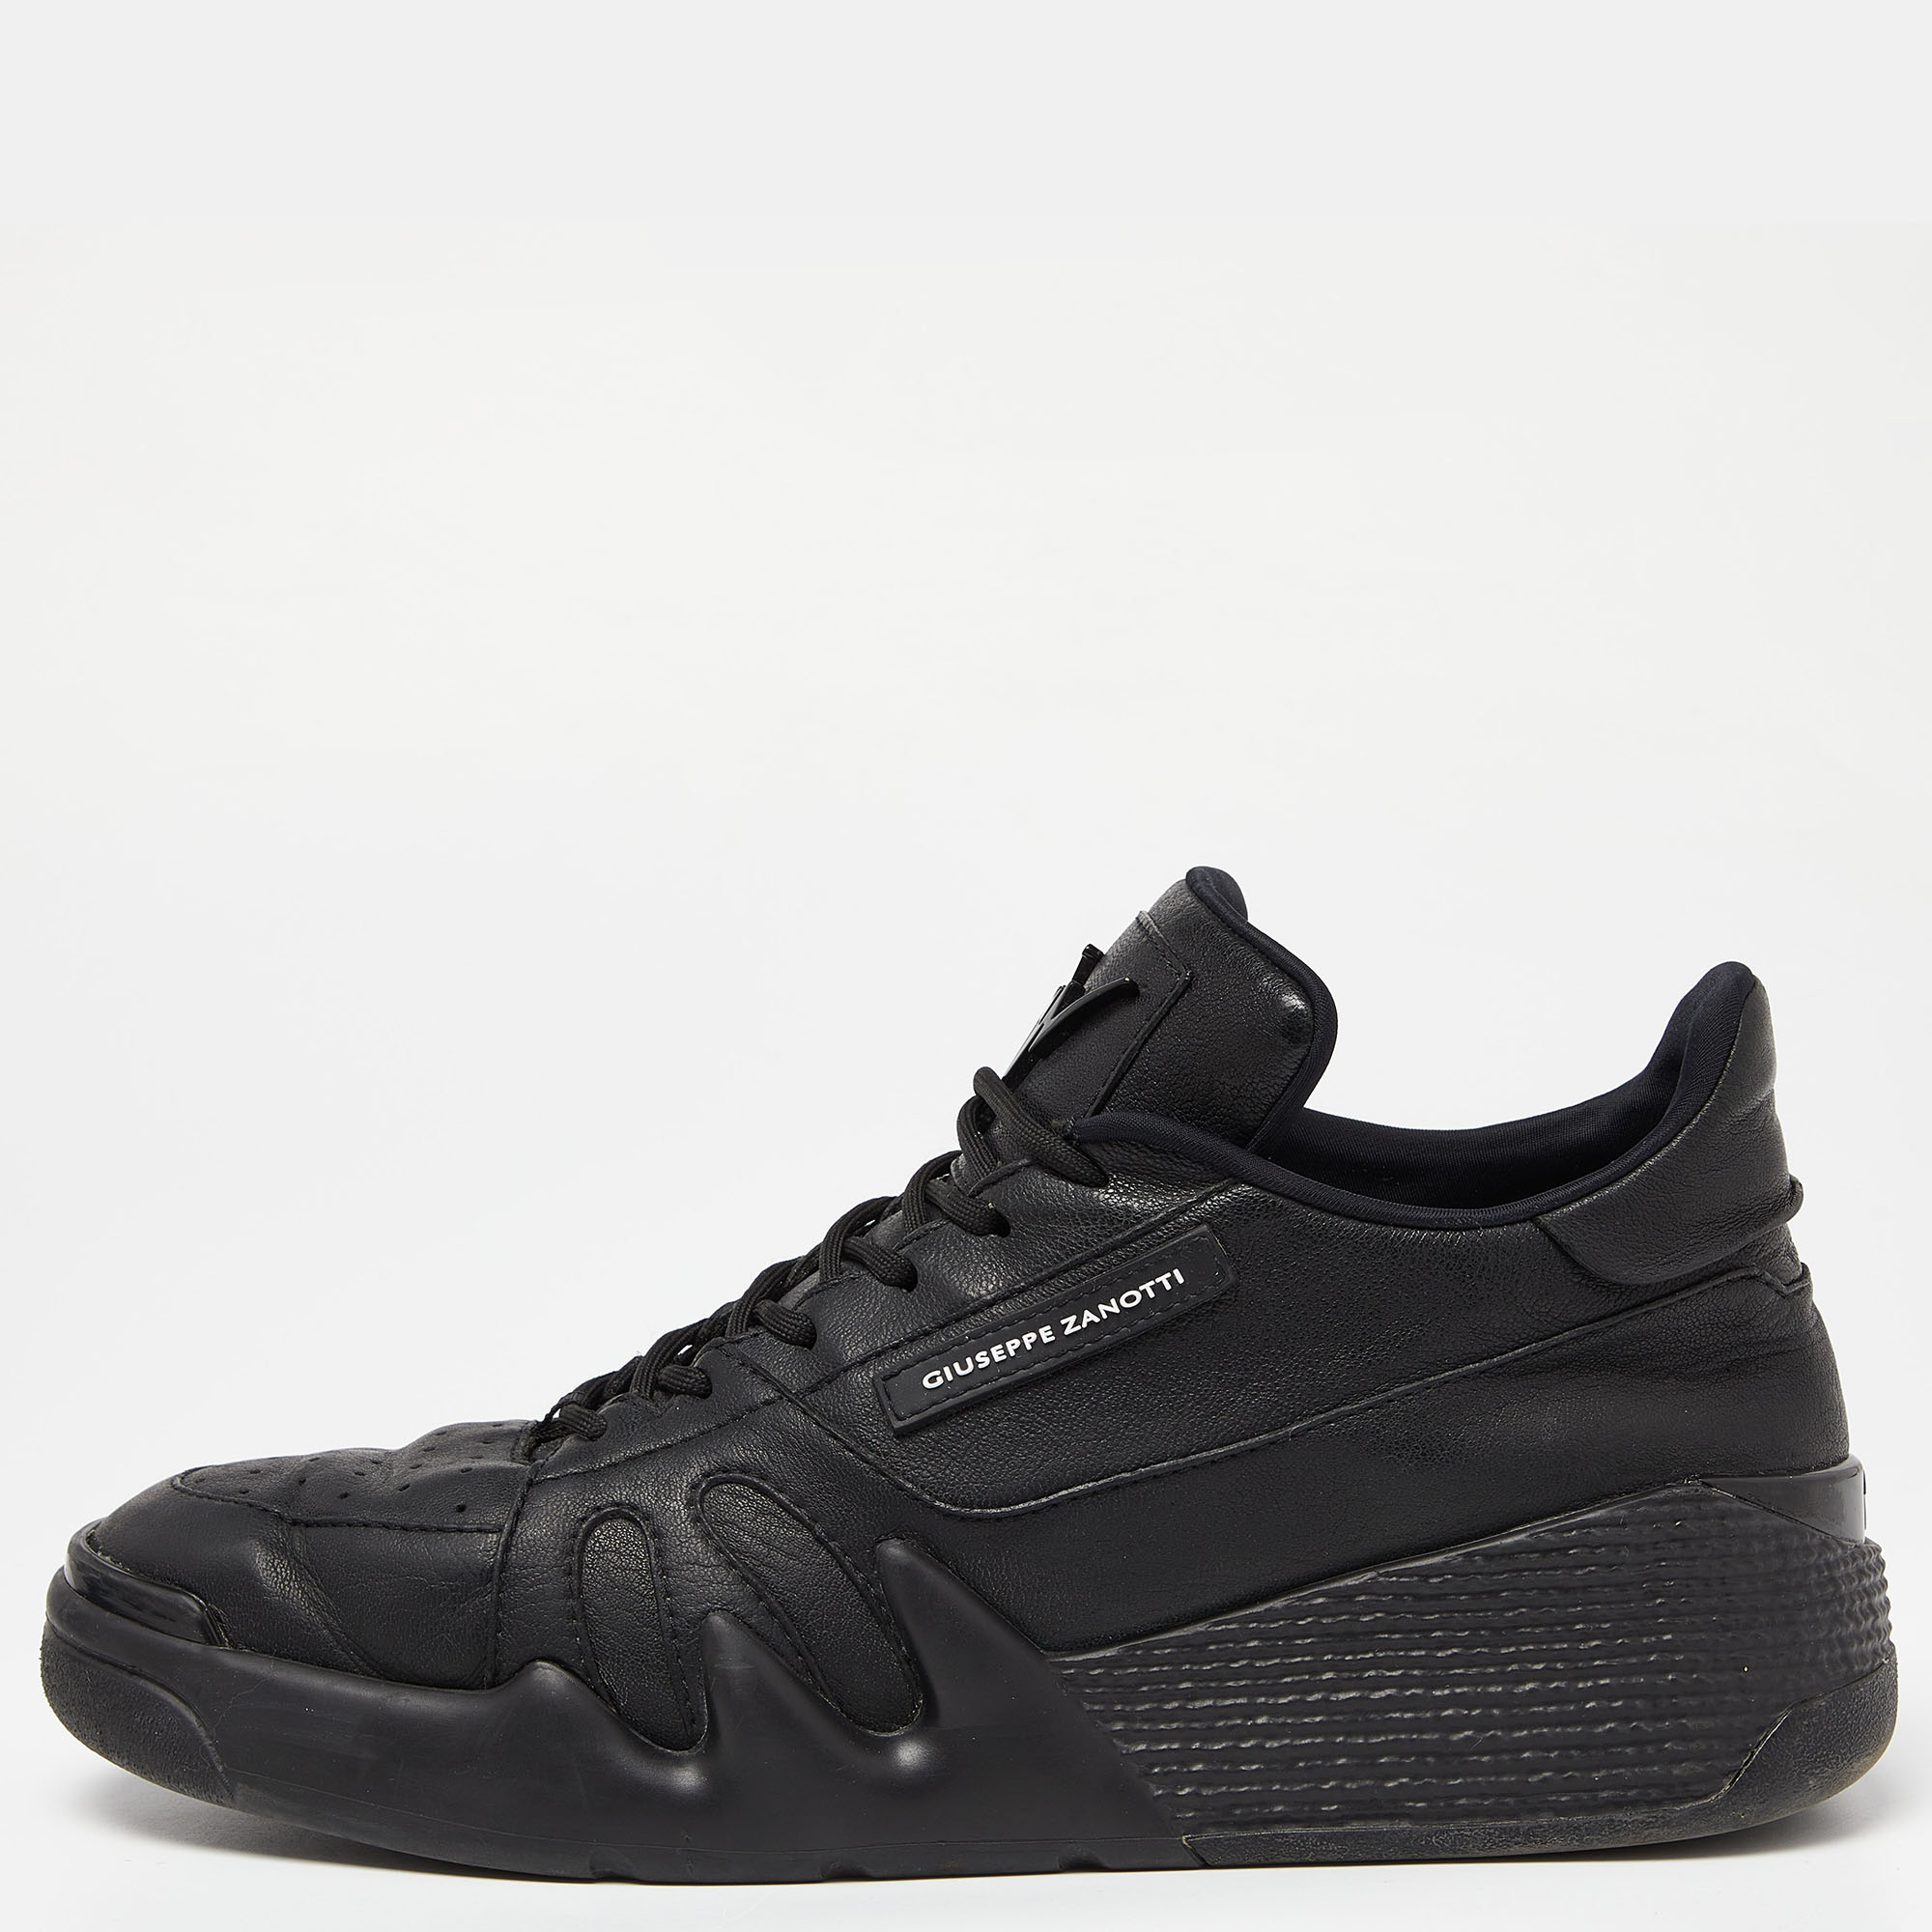 

Giuseppe Zanotti Black Leather Talon Low Top Sneakers Size